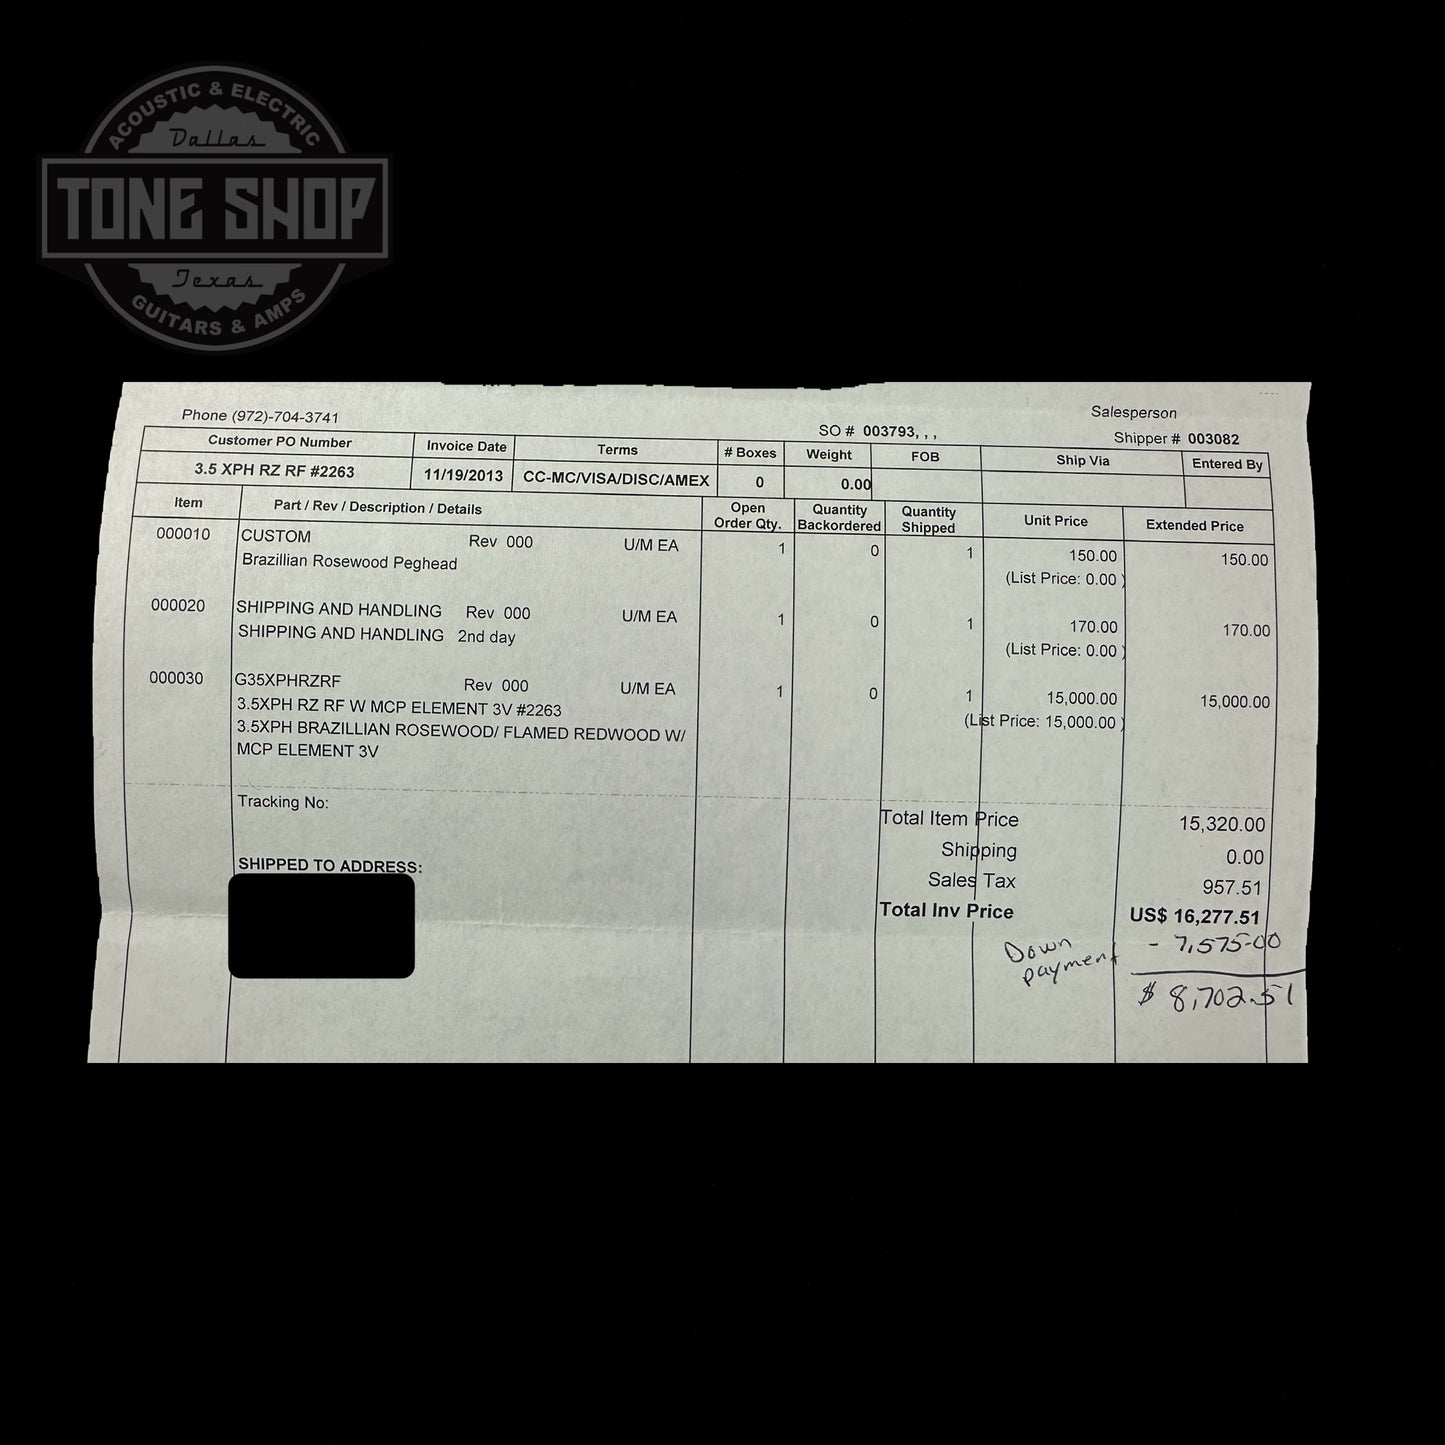 Original invoice for Used McPherson MG-3.5XPH RZ/RF.